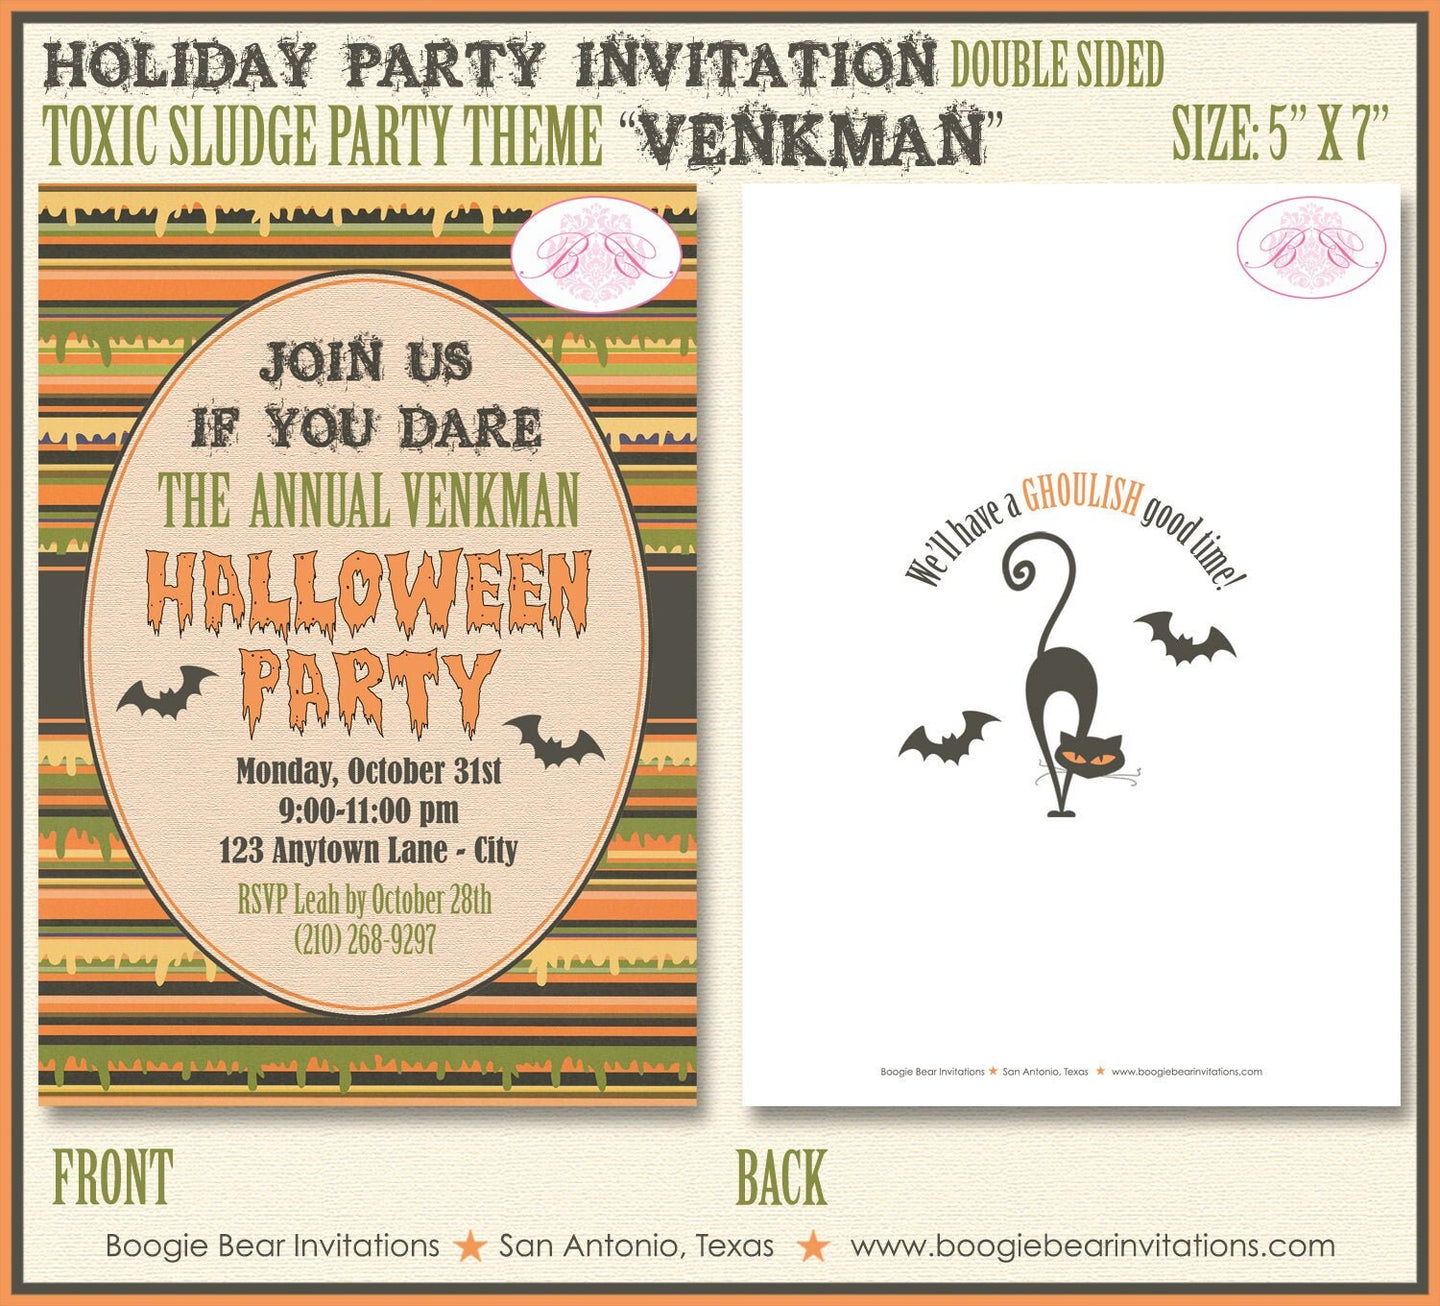 Toxic Sludge Halloween Party Invitation Spooky Slime Sewer Black Bat Cat Boogie Bear Invitations Venkman Theme Paperless Printable Printed